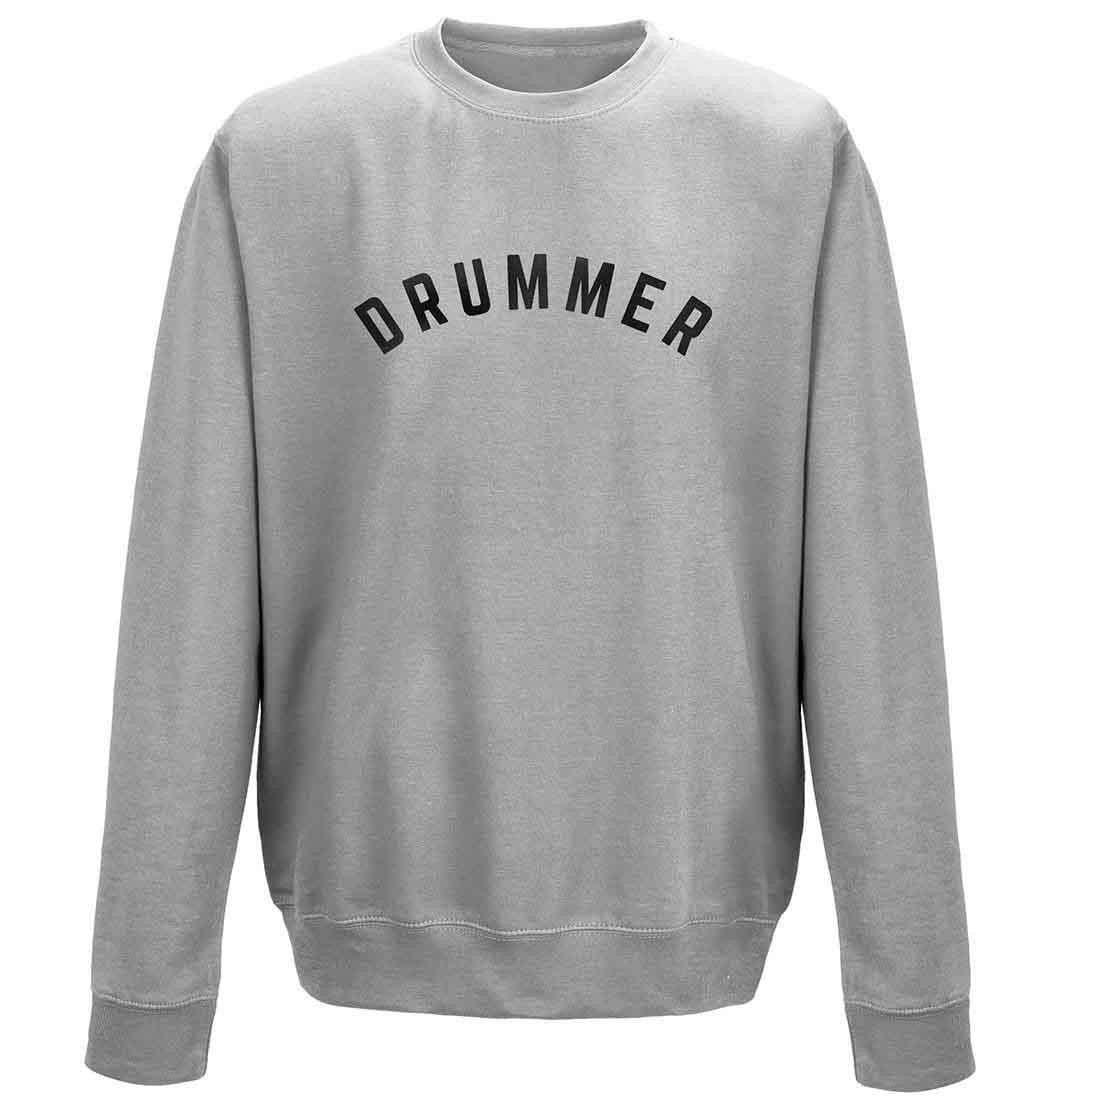 Drummer Graphic Sweatshirt 8Ball